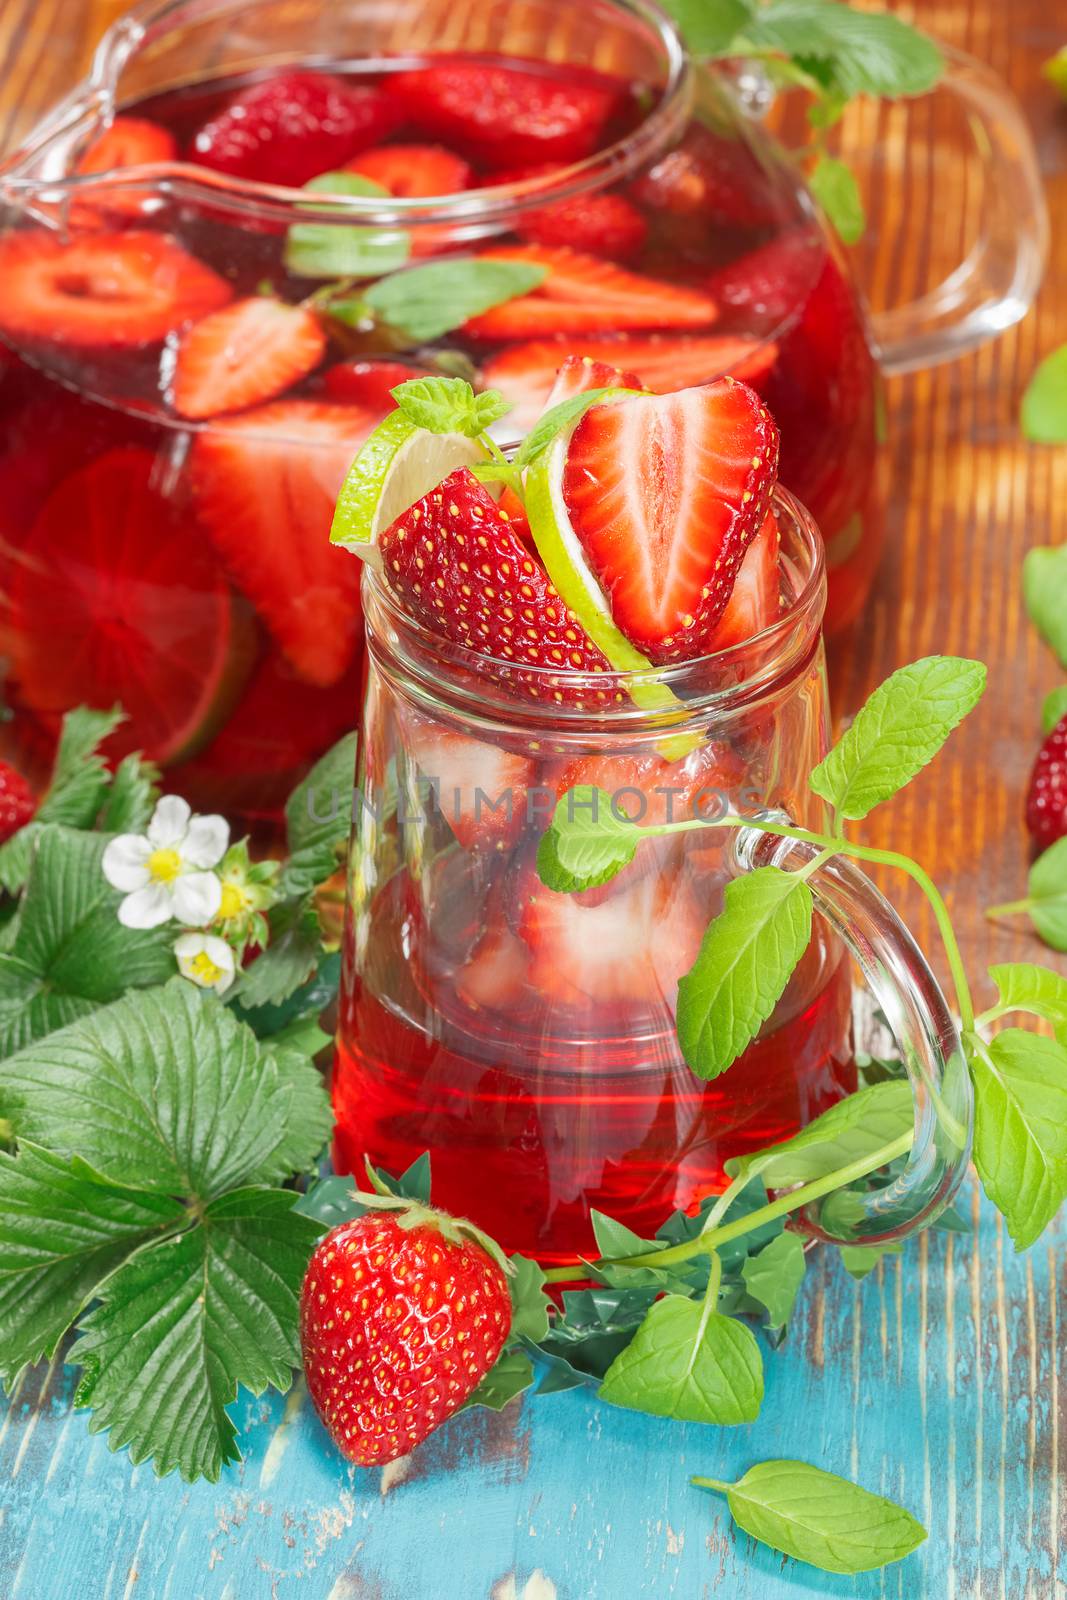 Strawberry juice by Slast20